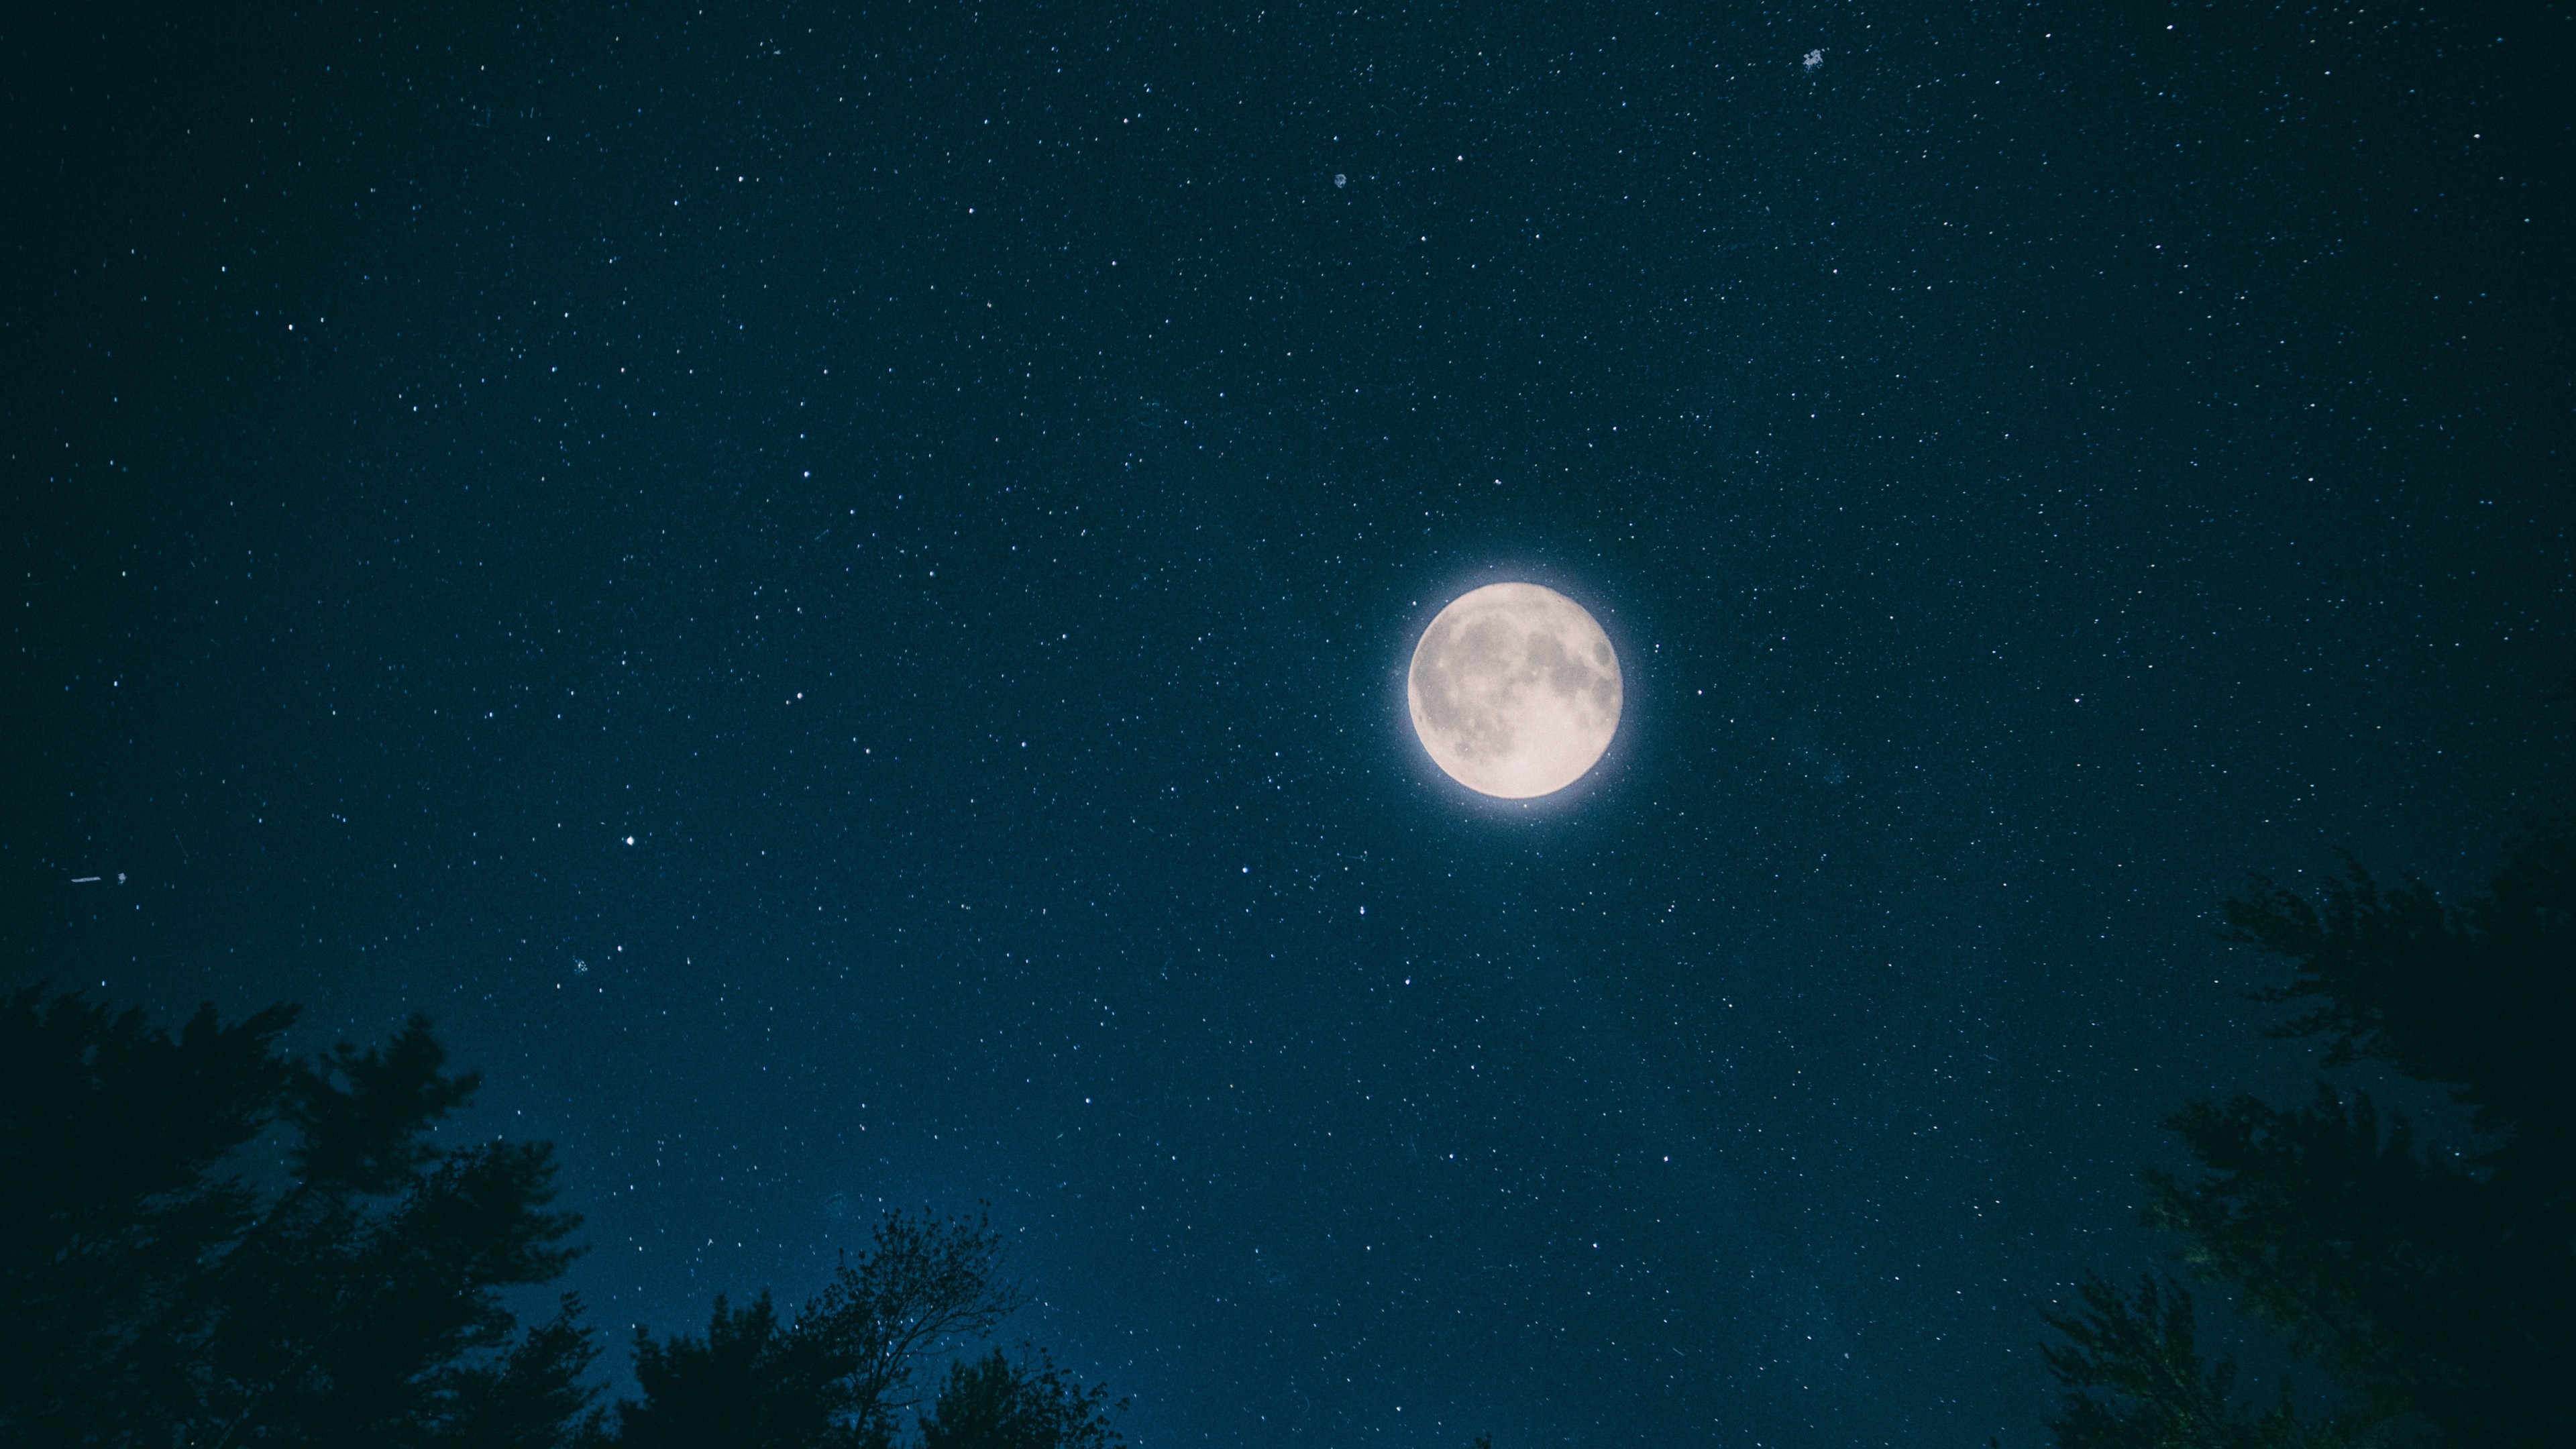 full moon night sky hd